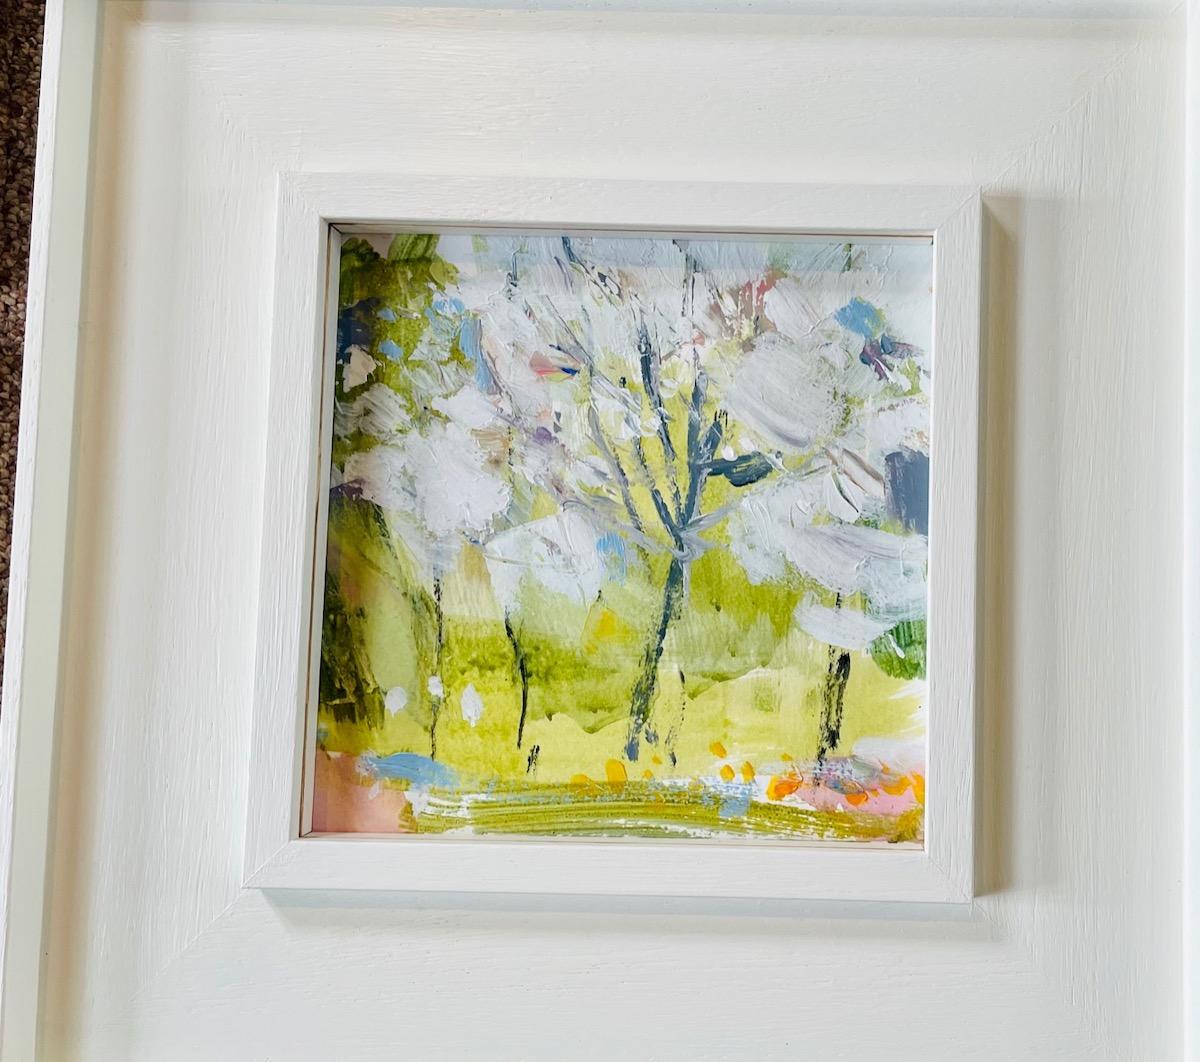 Park Blossom I by Natalie Bird, abstract painting, original art for sale - Abstract Painting by Natalie Bird 